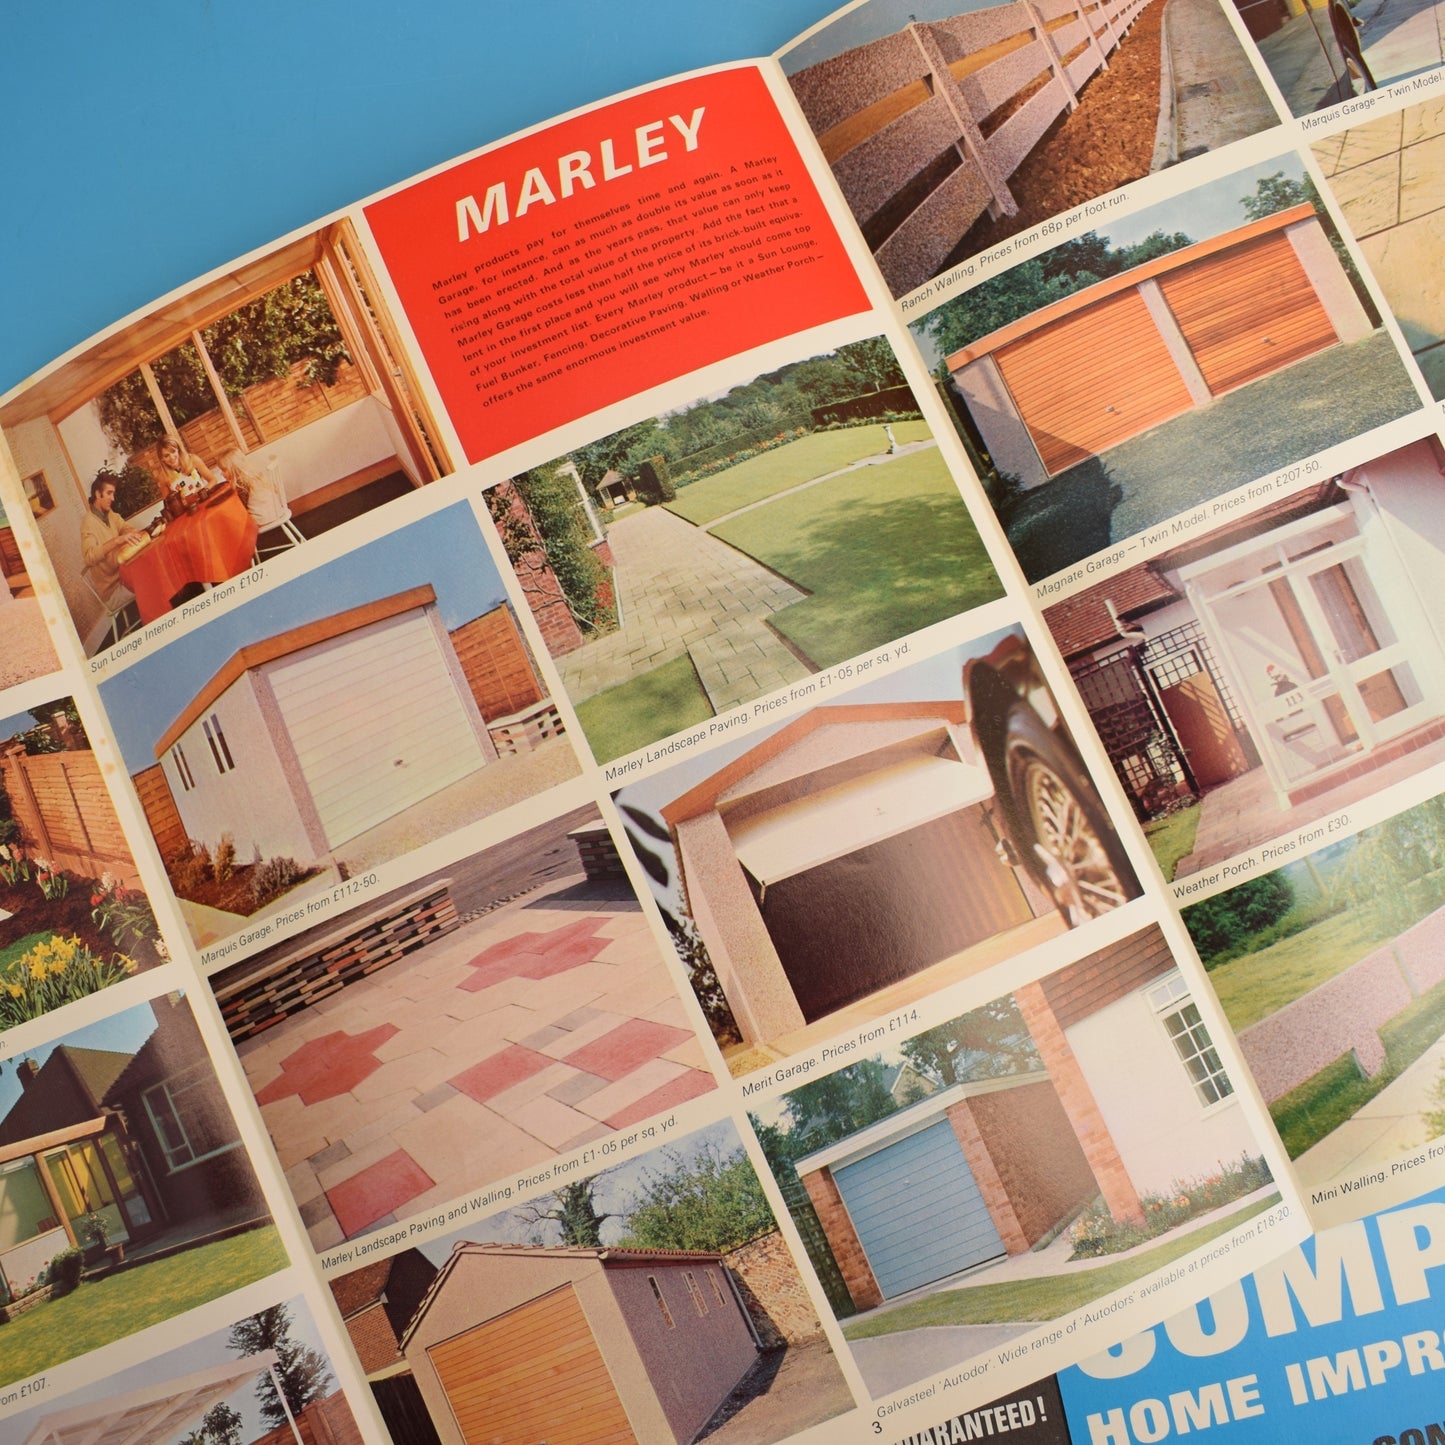 Vintage 1970s Marley Garage / Building Brochures